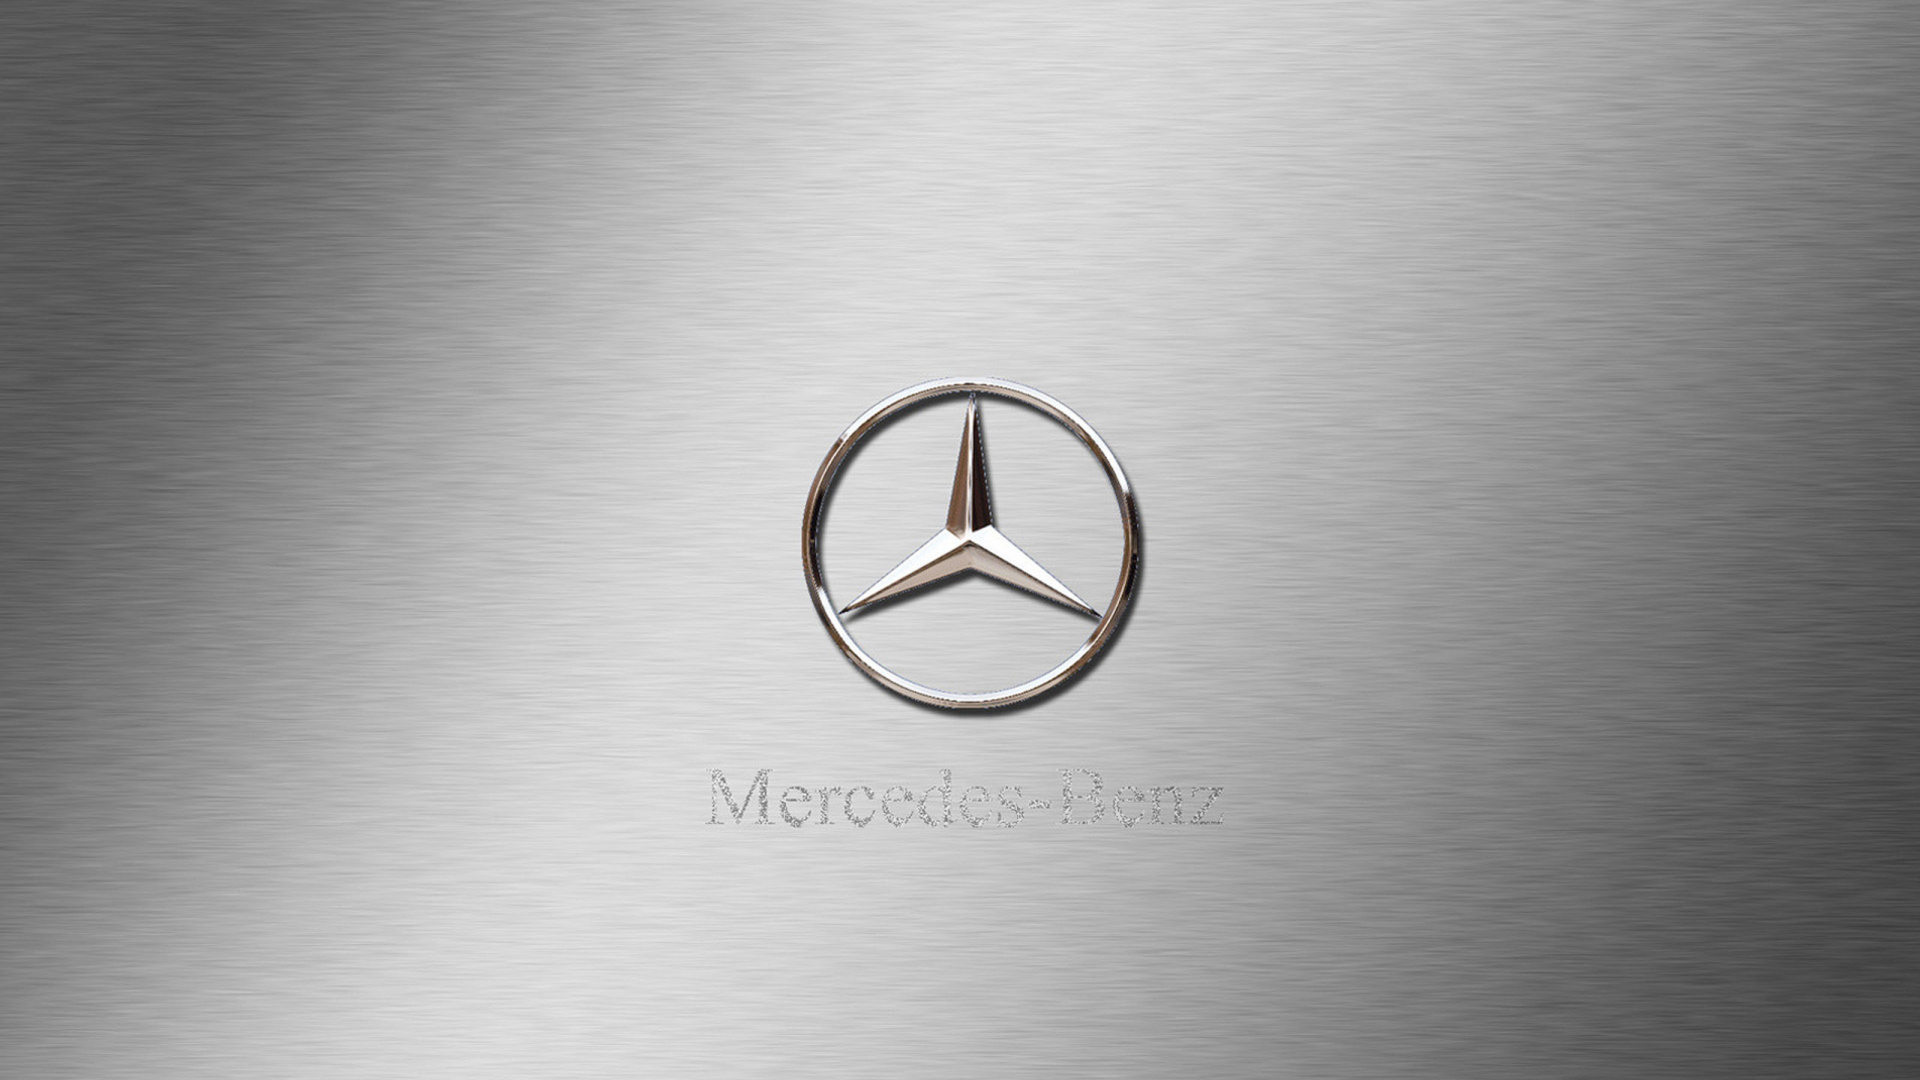 Daimler Ag, Mercedes-Benz SLR McLaren, Auto, Firmenzeichen, Kreis. Wallpaper in 1920x1080 Resolution